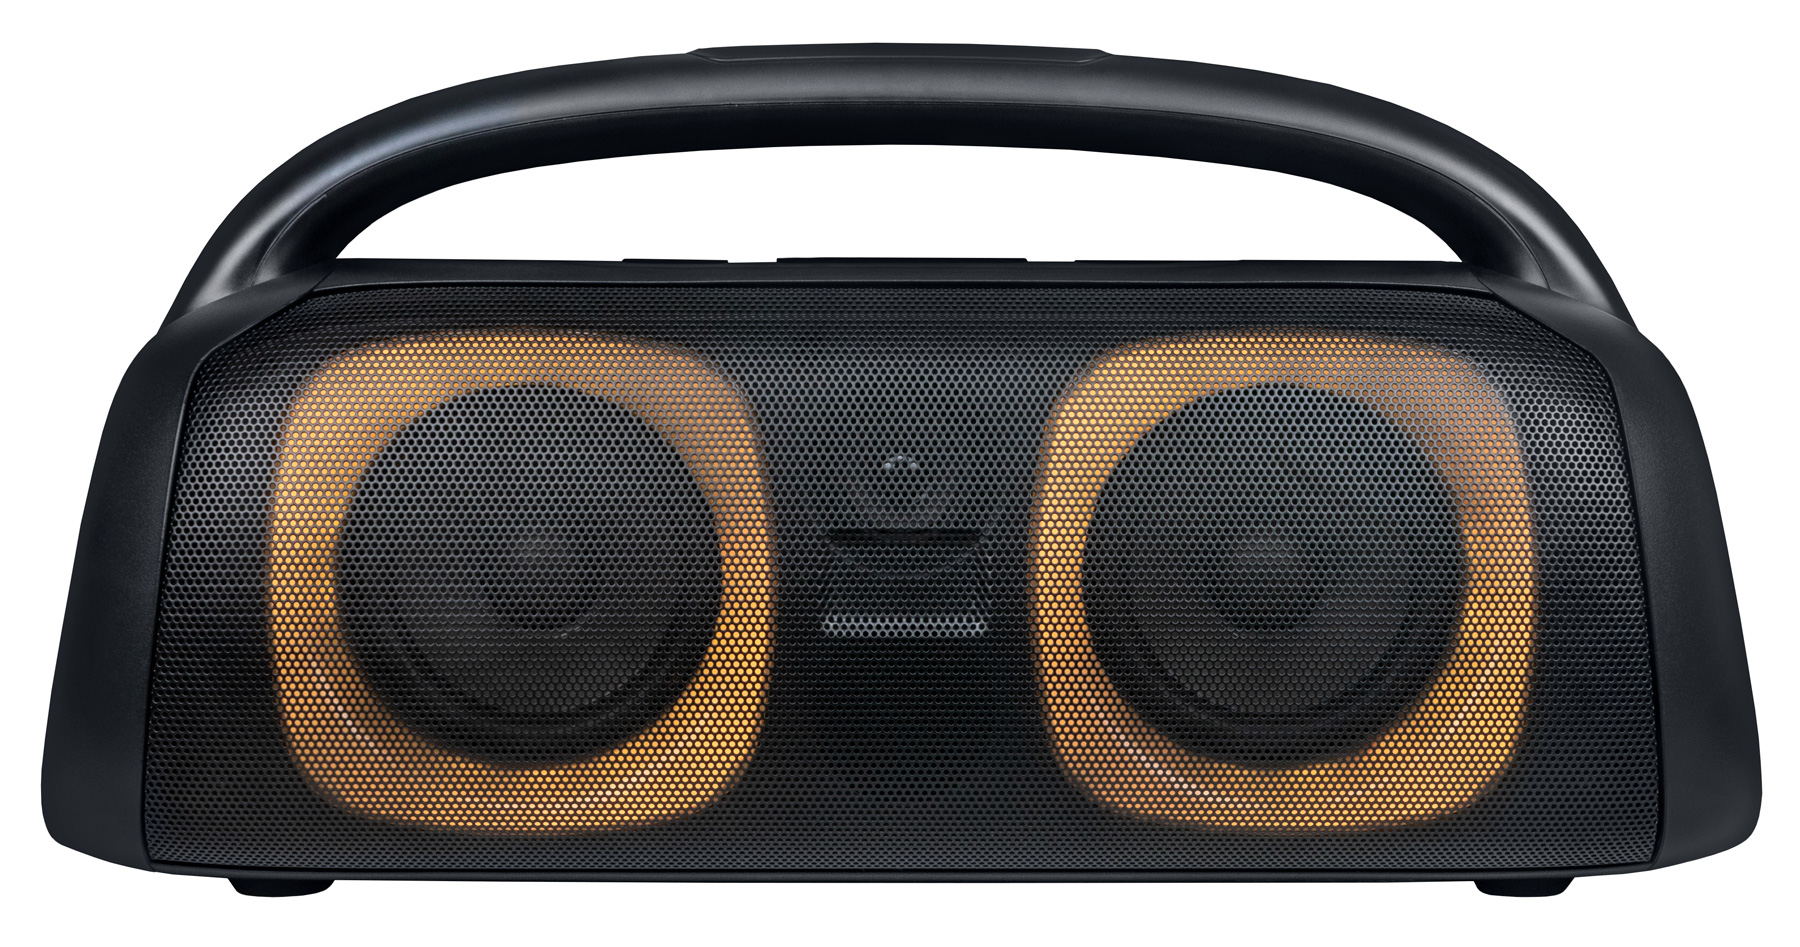 Портативная колонка Xiaomi DBS Bluetooth Speaker PM-550 колонка портативная xiaomi mi bluetooth compact speaker 2 mdz 28 di qbh4141eu